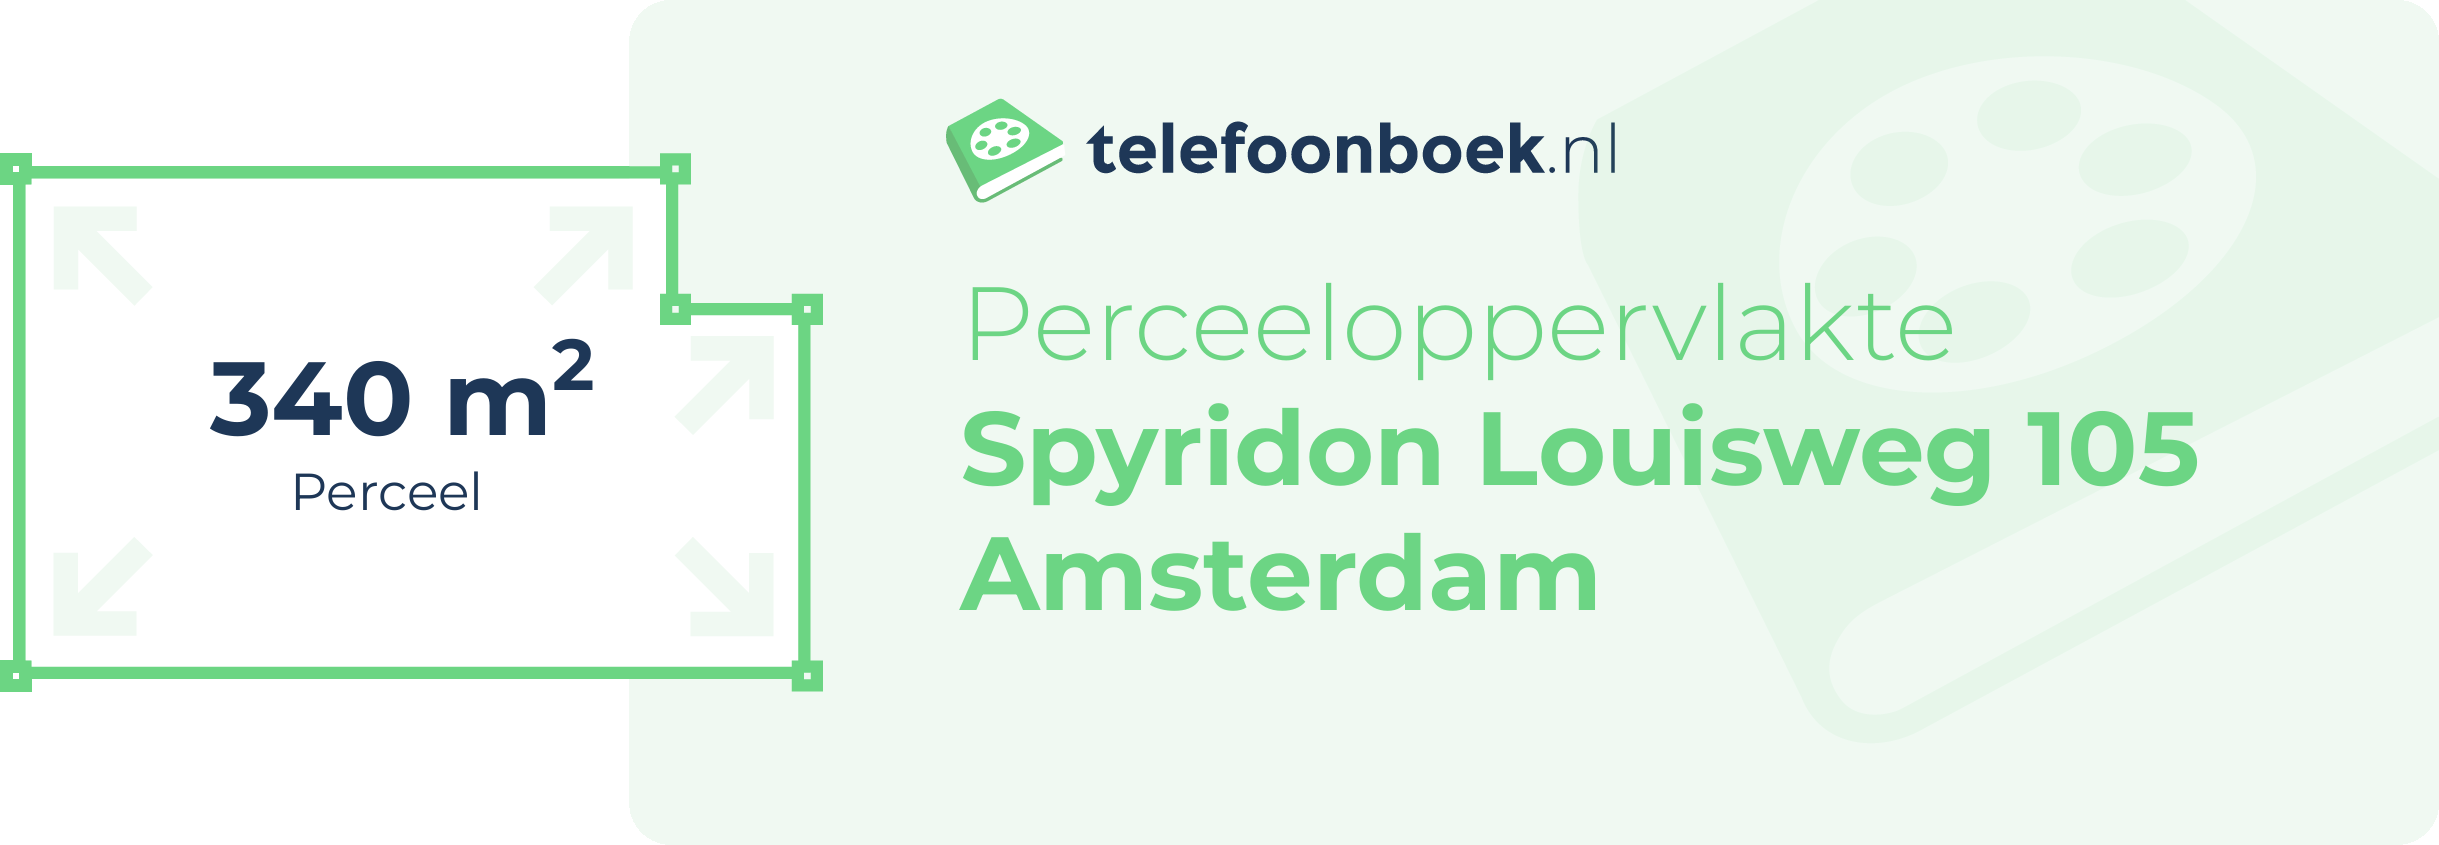 Perceeloppervlakte Spyridon Louisweg 105 Amsterdam